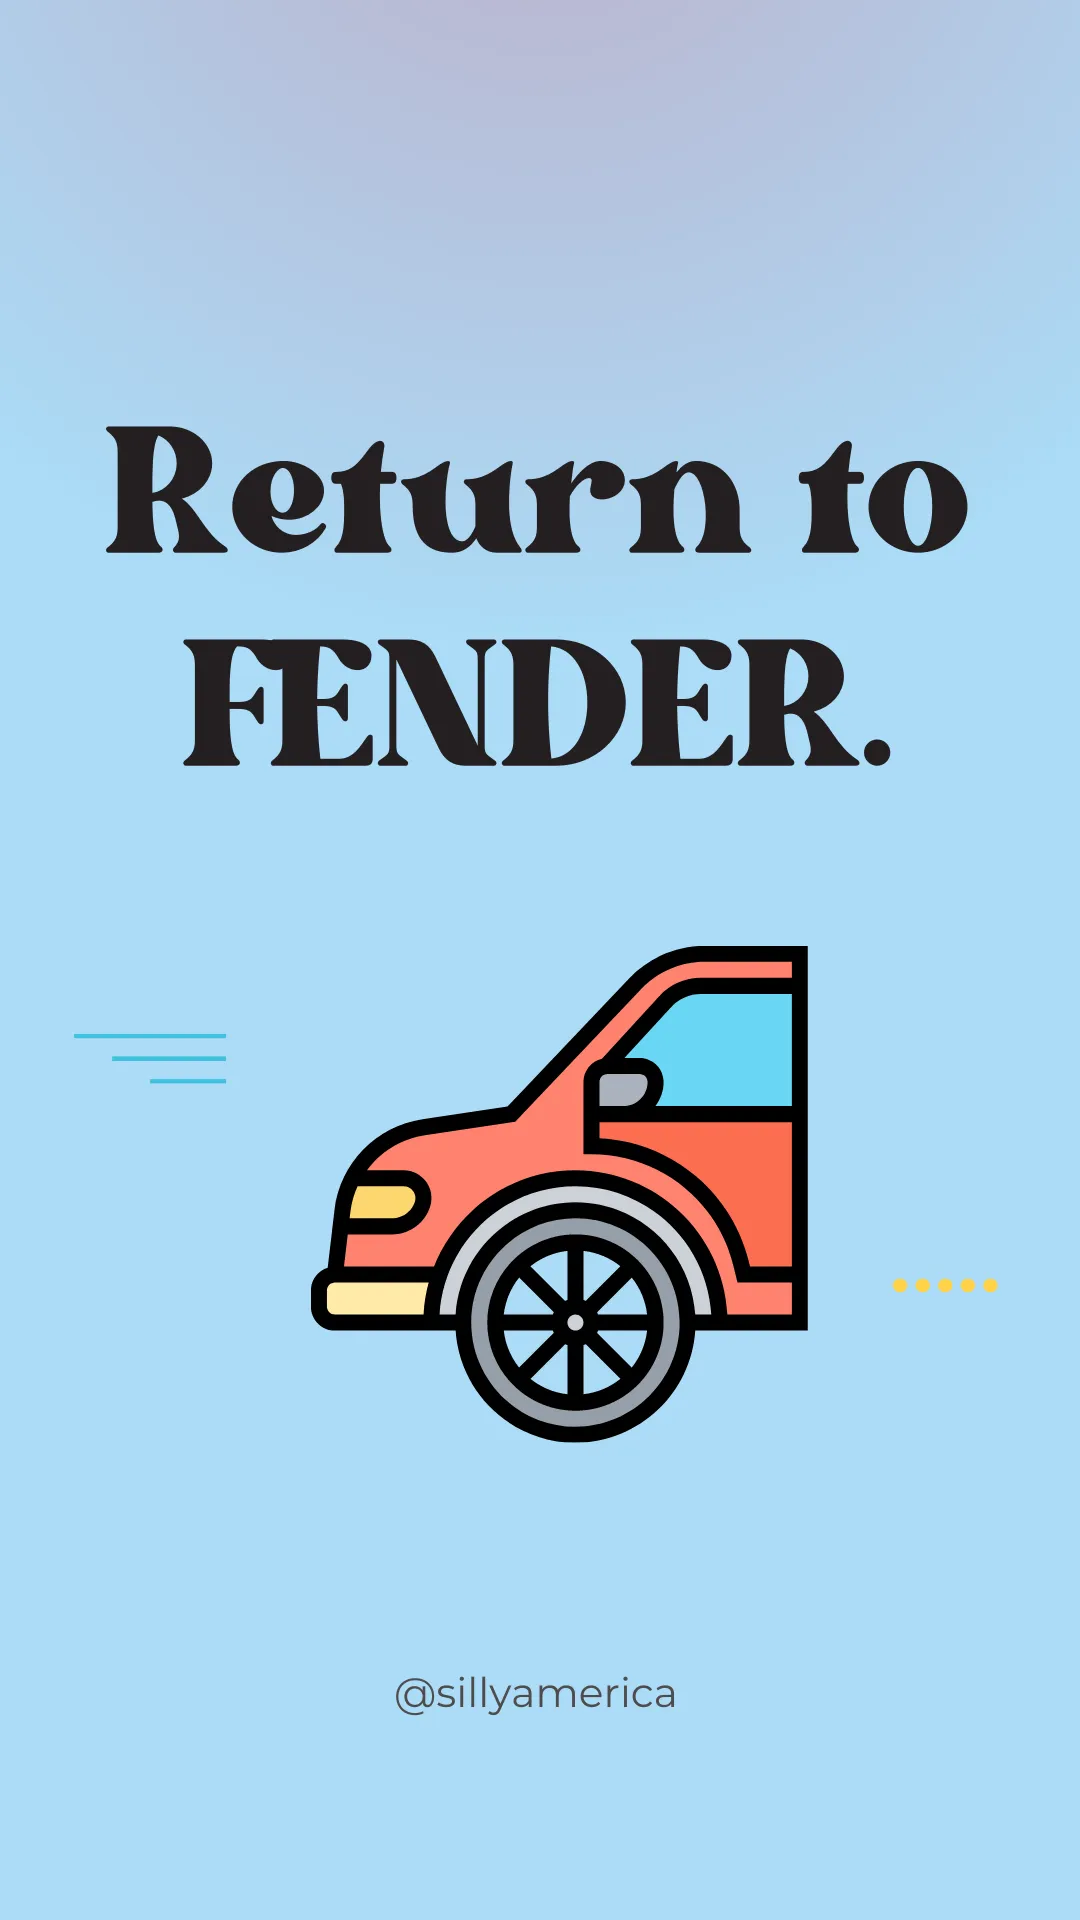 Return to FENDER. - Road Trip Puns